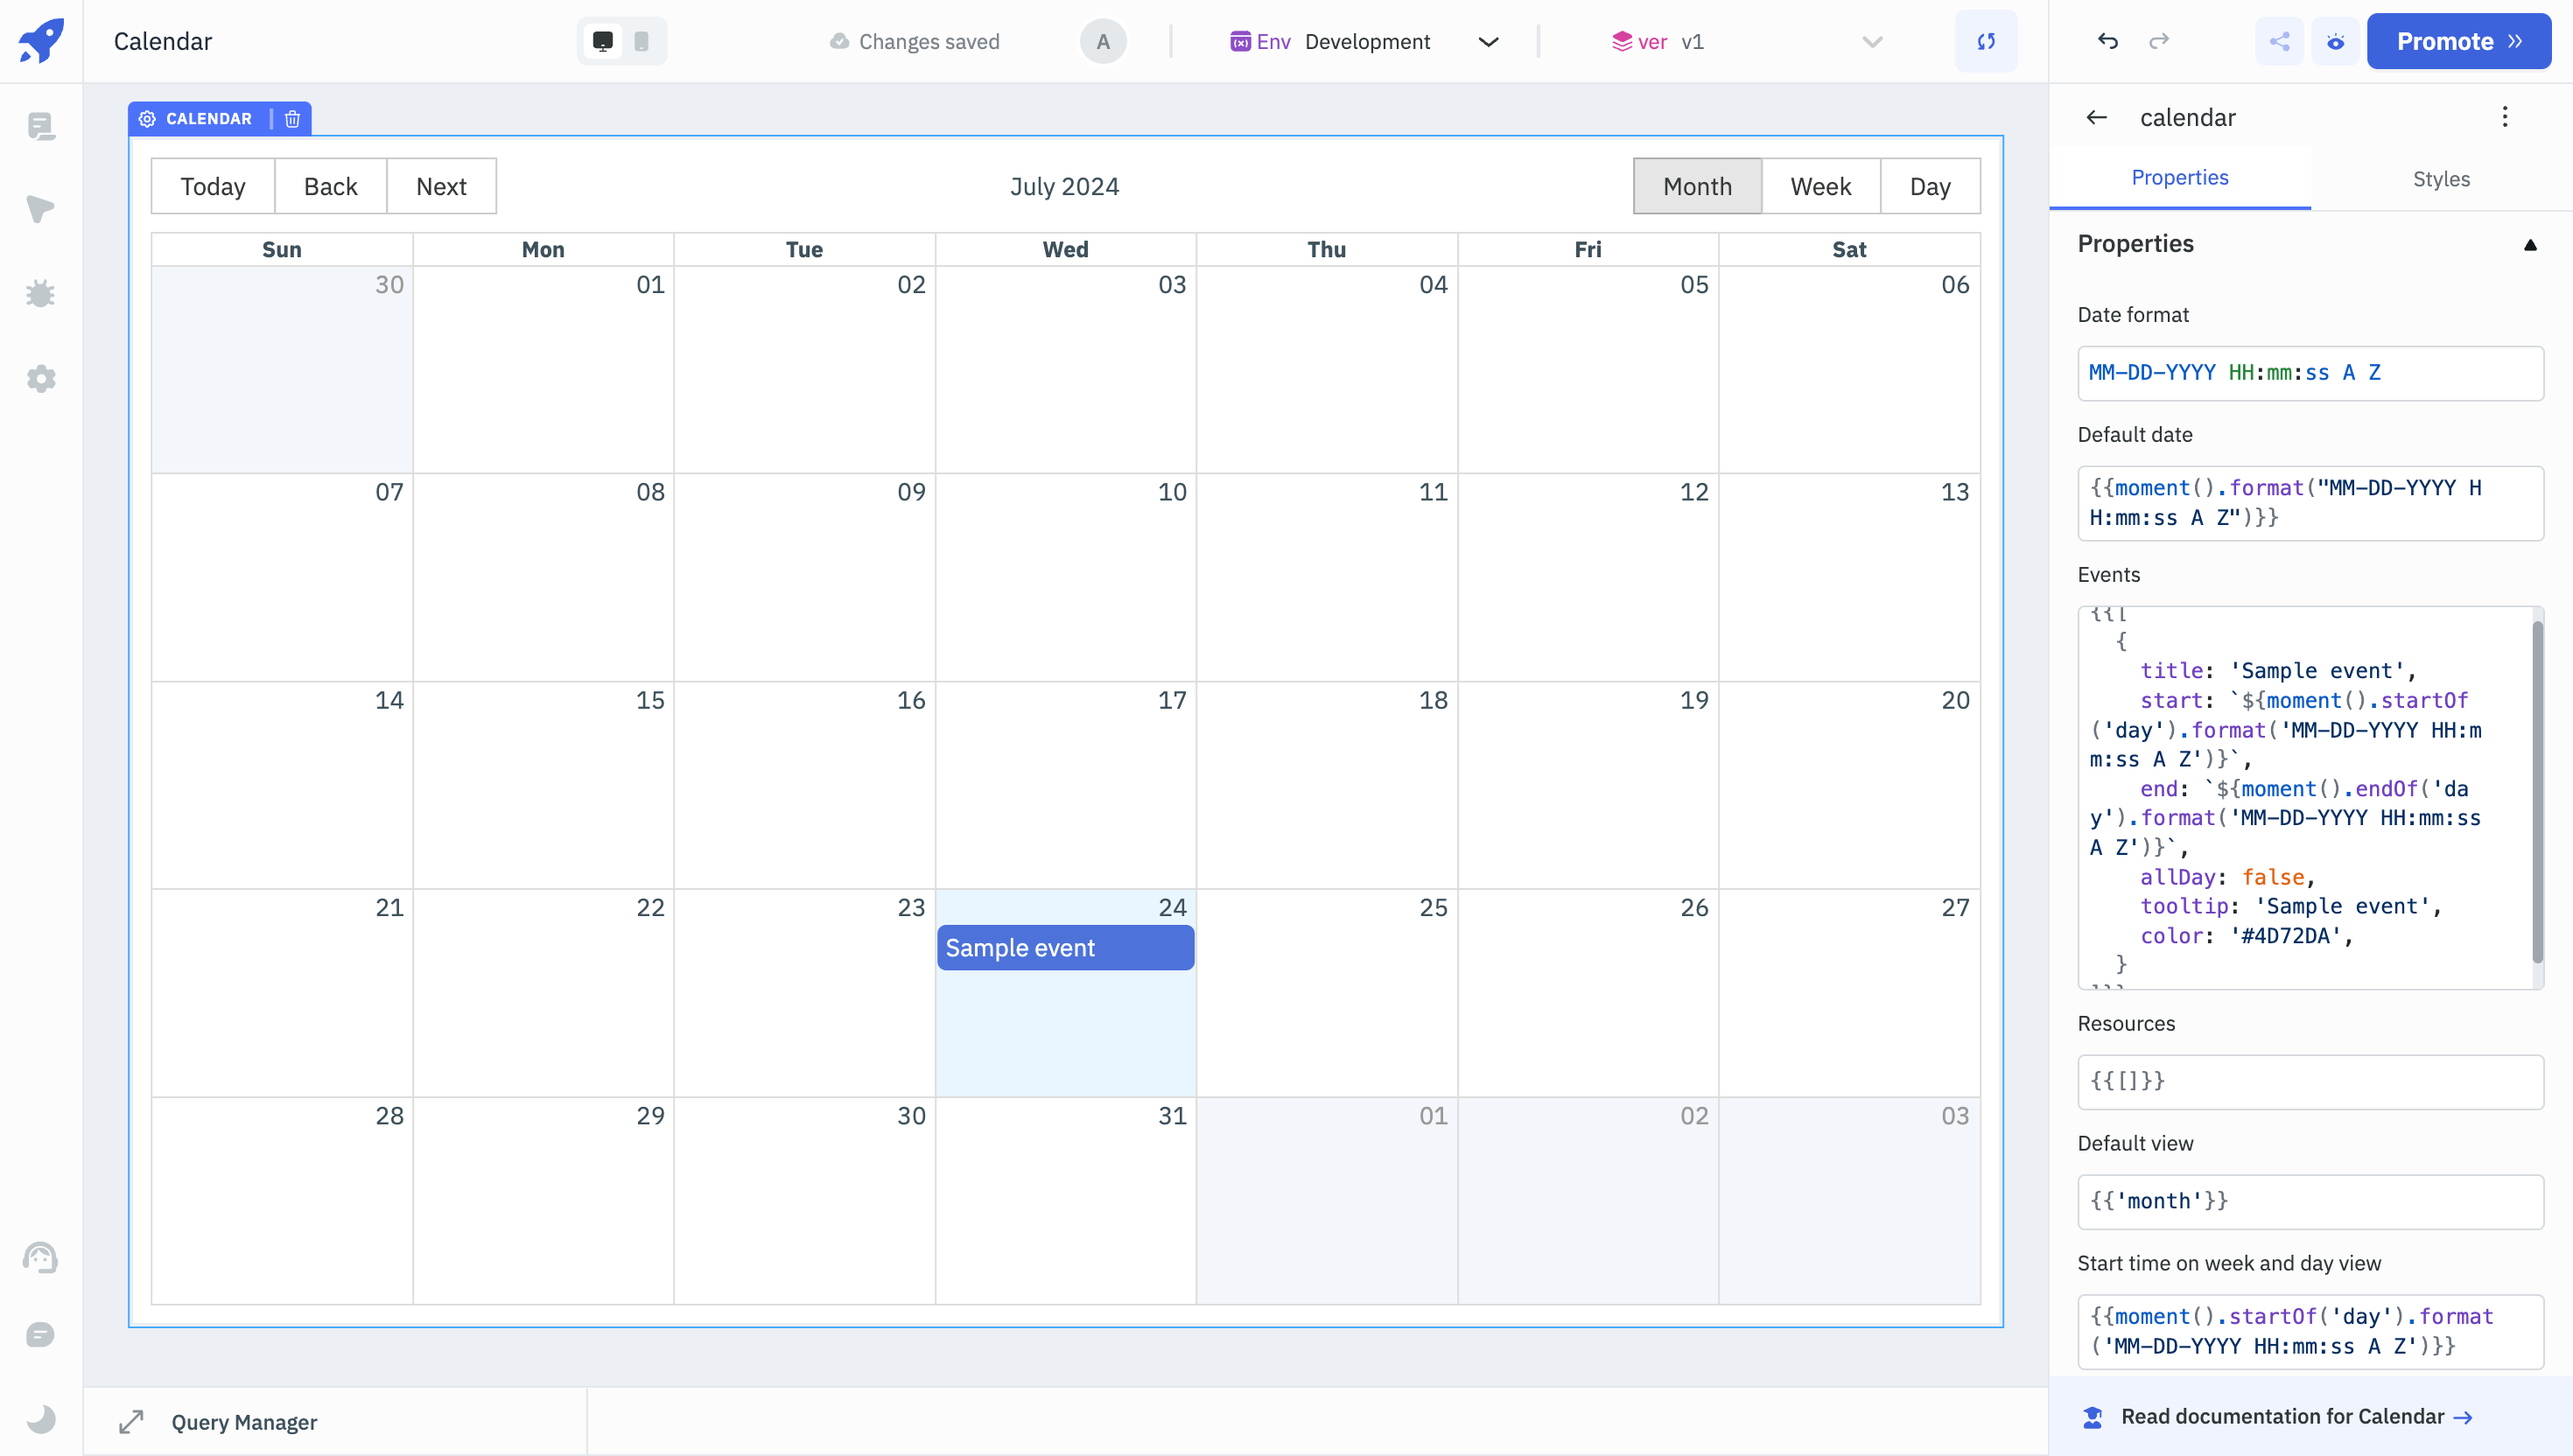 ToolJet - Widget Reference - Calendar